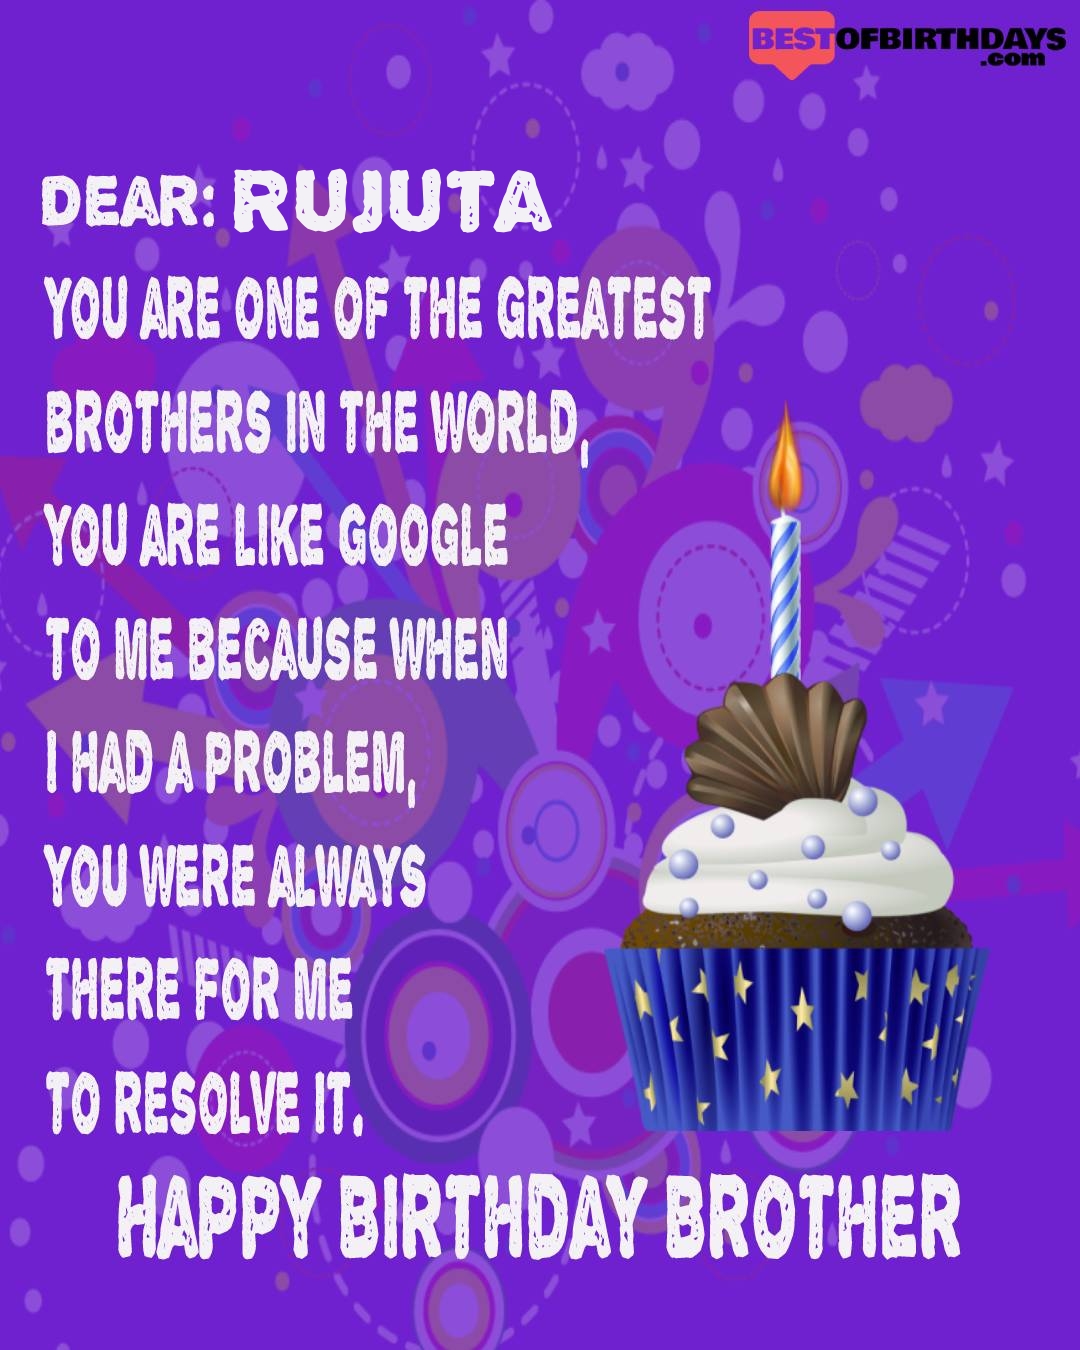 Happy birthday rujuta bhai brother bro